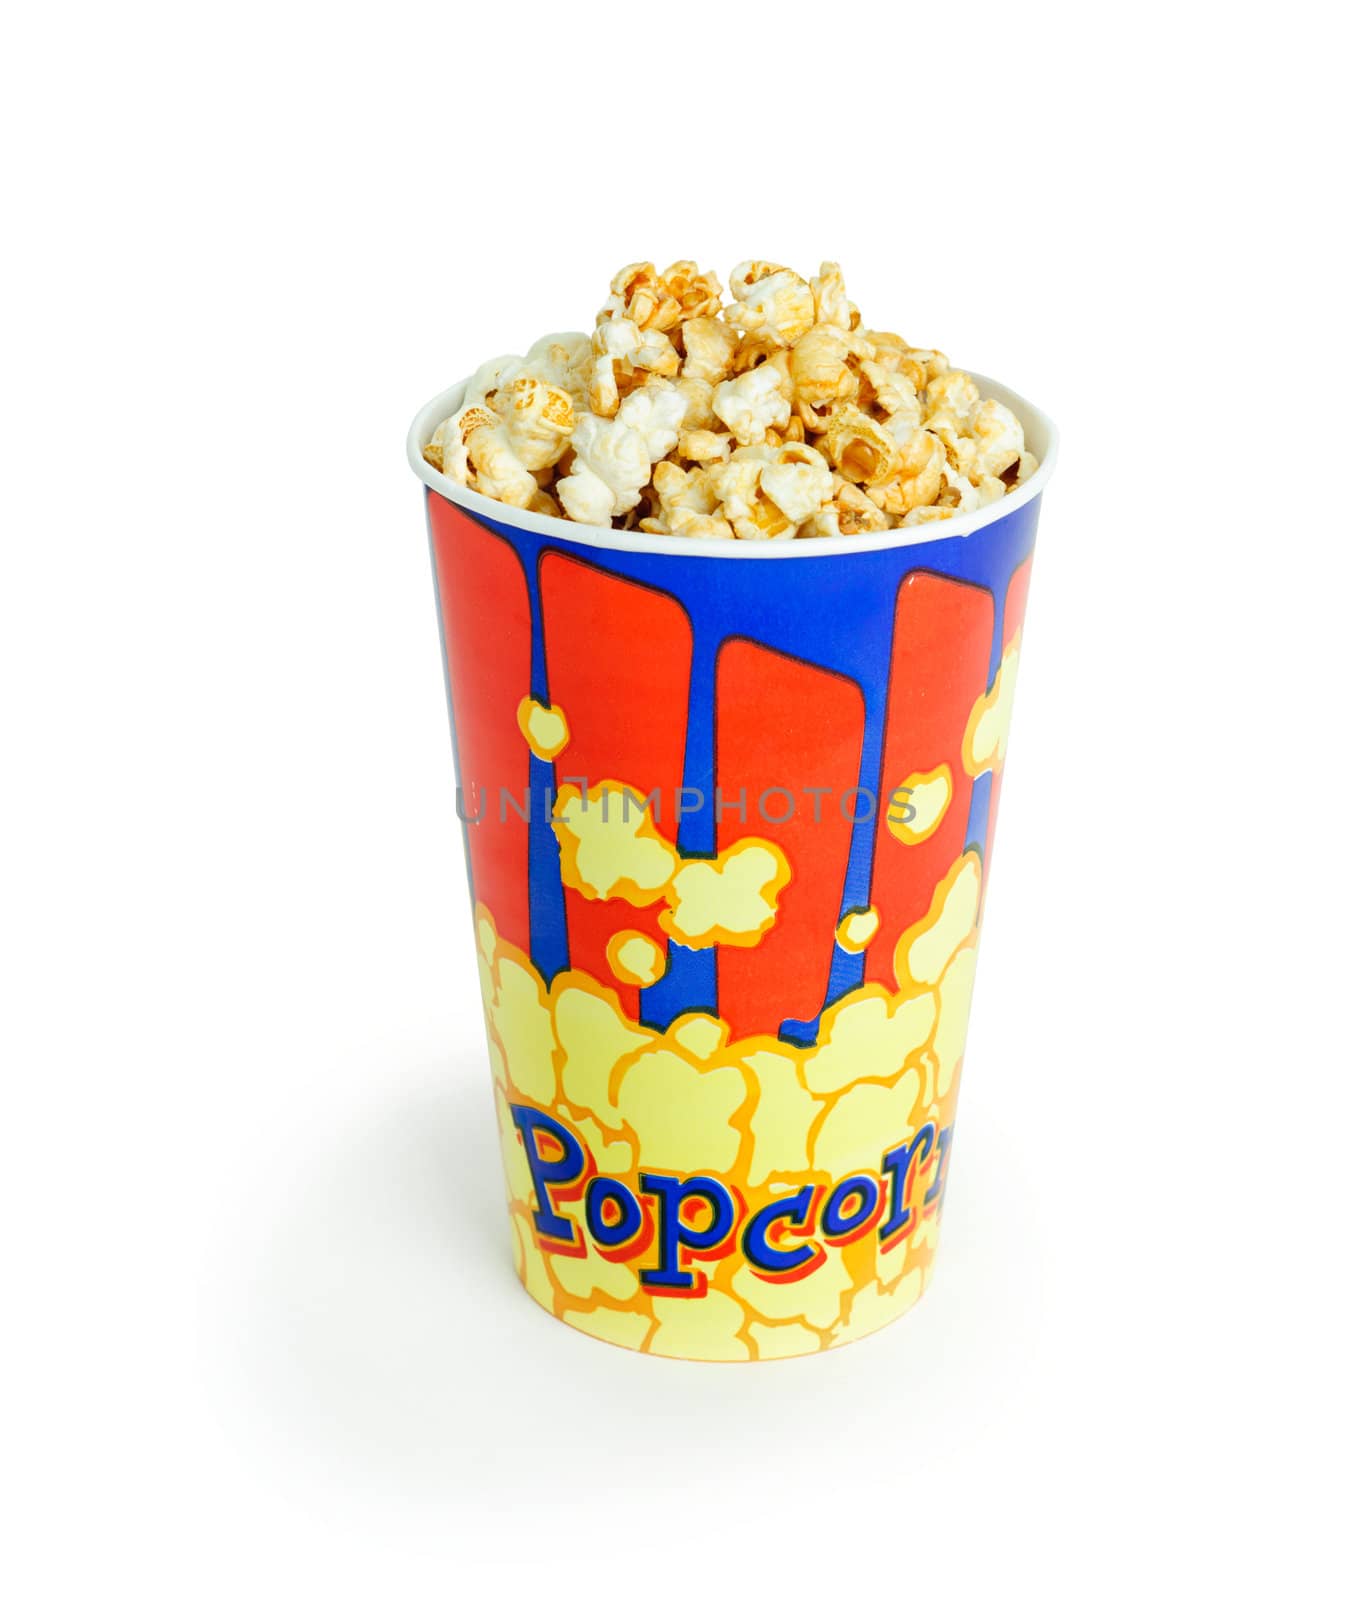 Bucket of popcorn by velkol